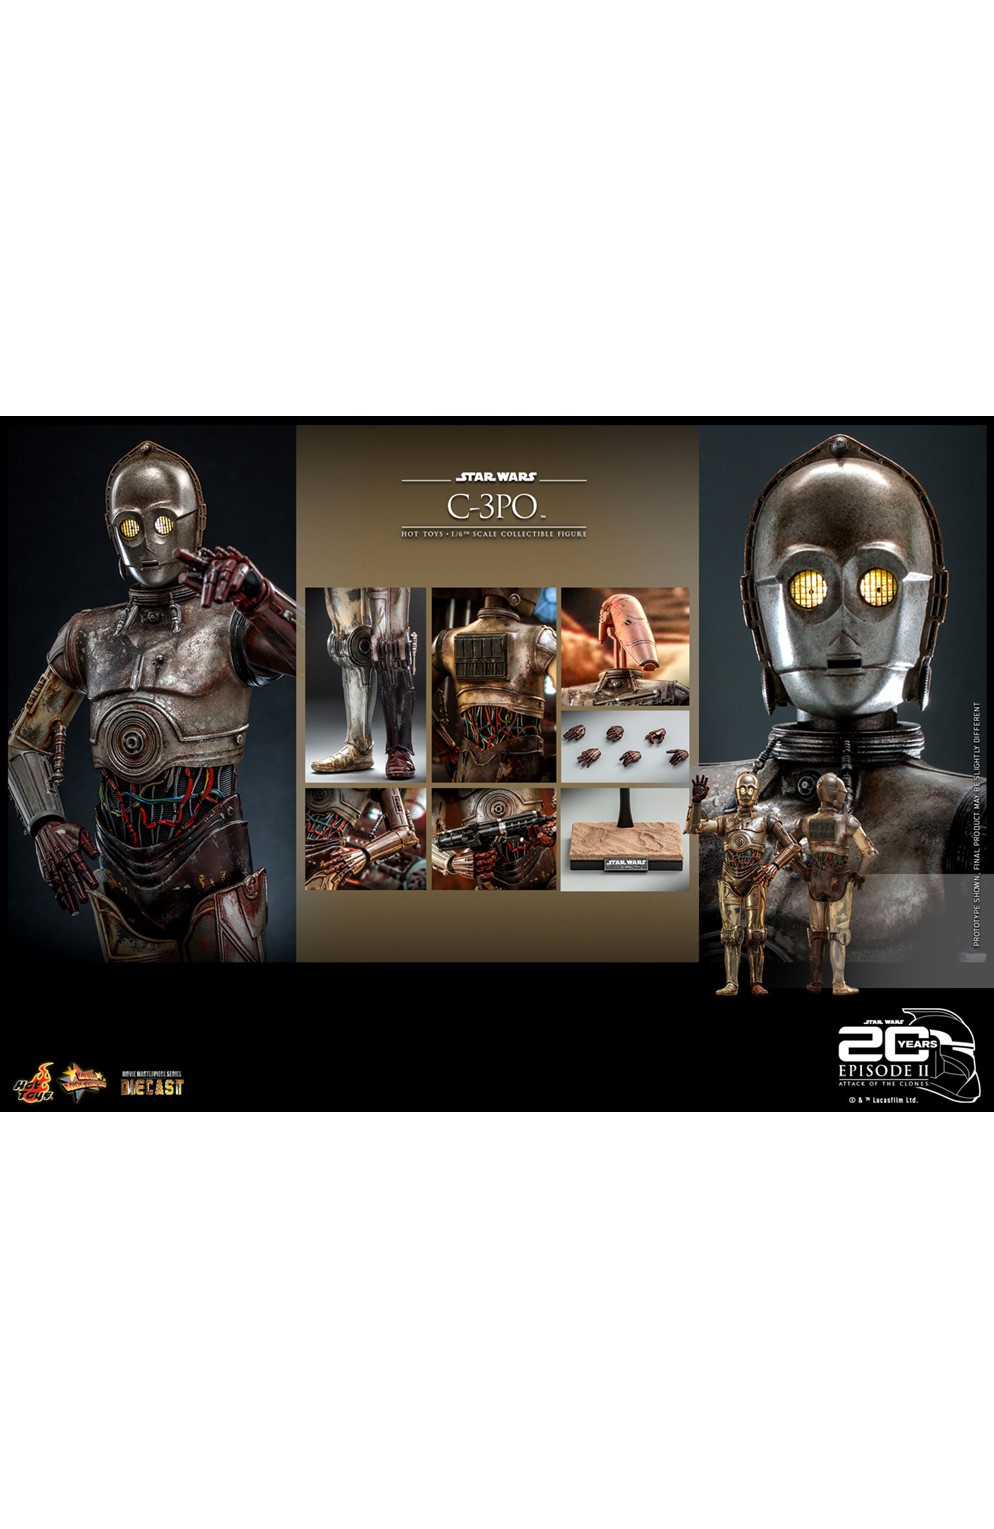 C-3PO - Star Wars Aotc Sixth Scale Figure